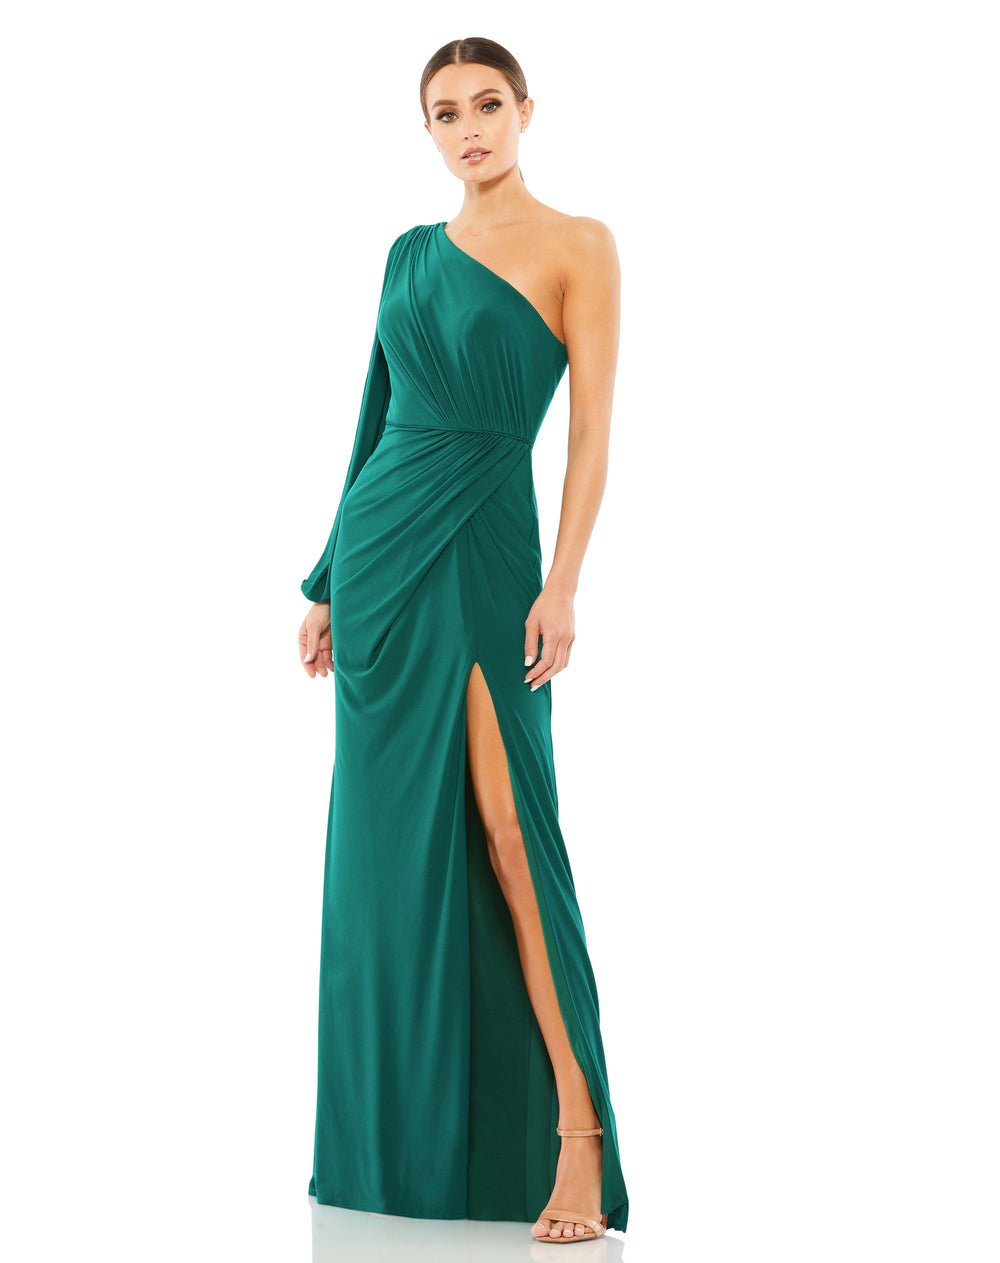 Jewel Tone Dresses: Rubies & Emeralds by Portia & Scarlett | SHAIDE ...